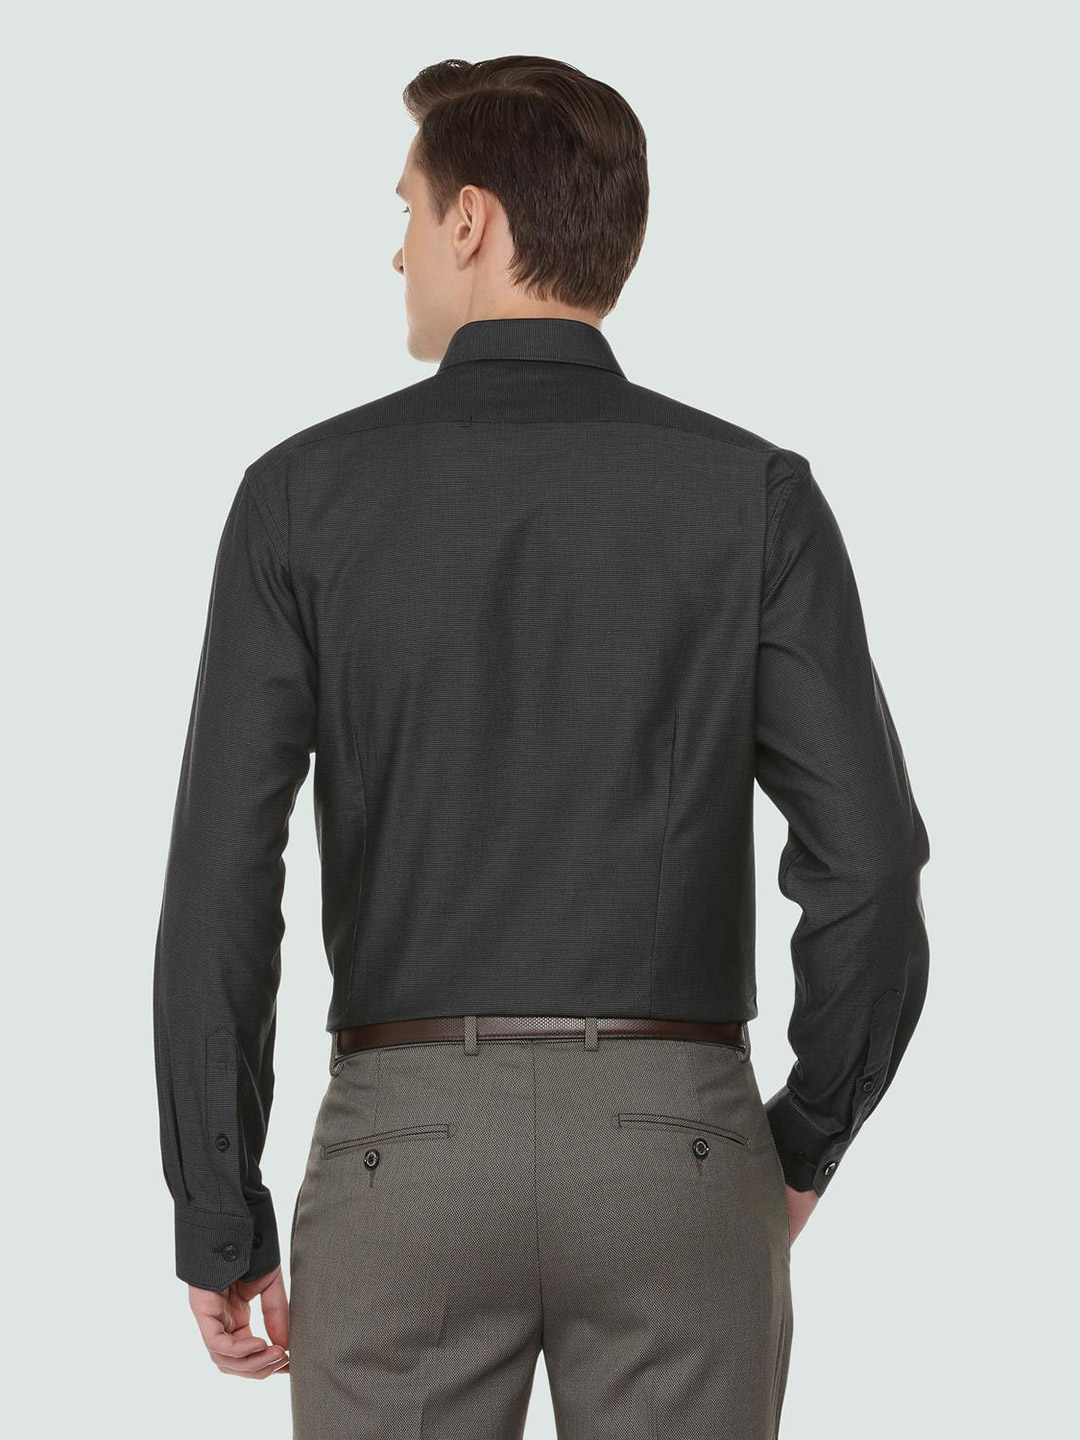 Louis Philippe solid black formal shirt - G3-MCS5405 | www.waldenwongart.com